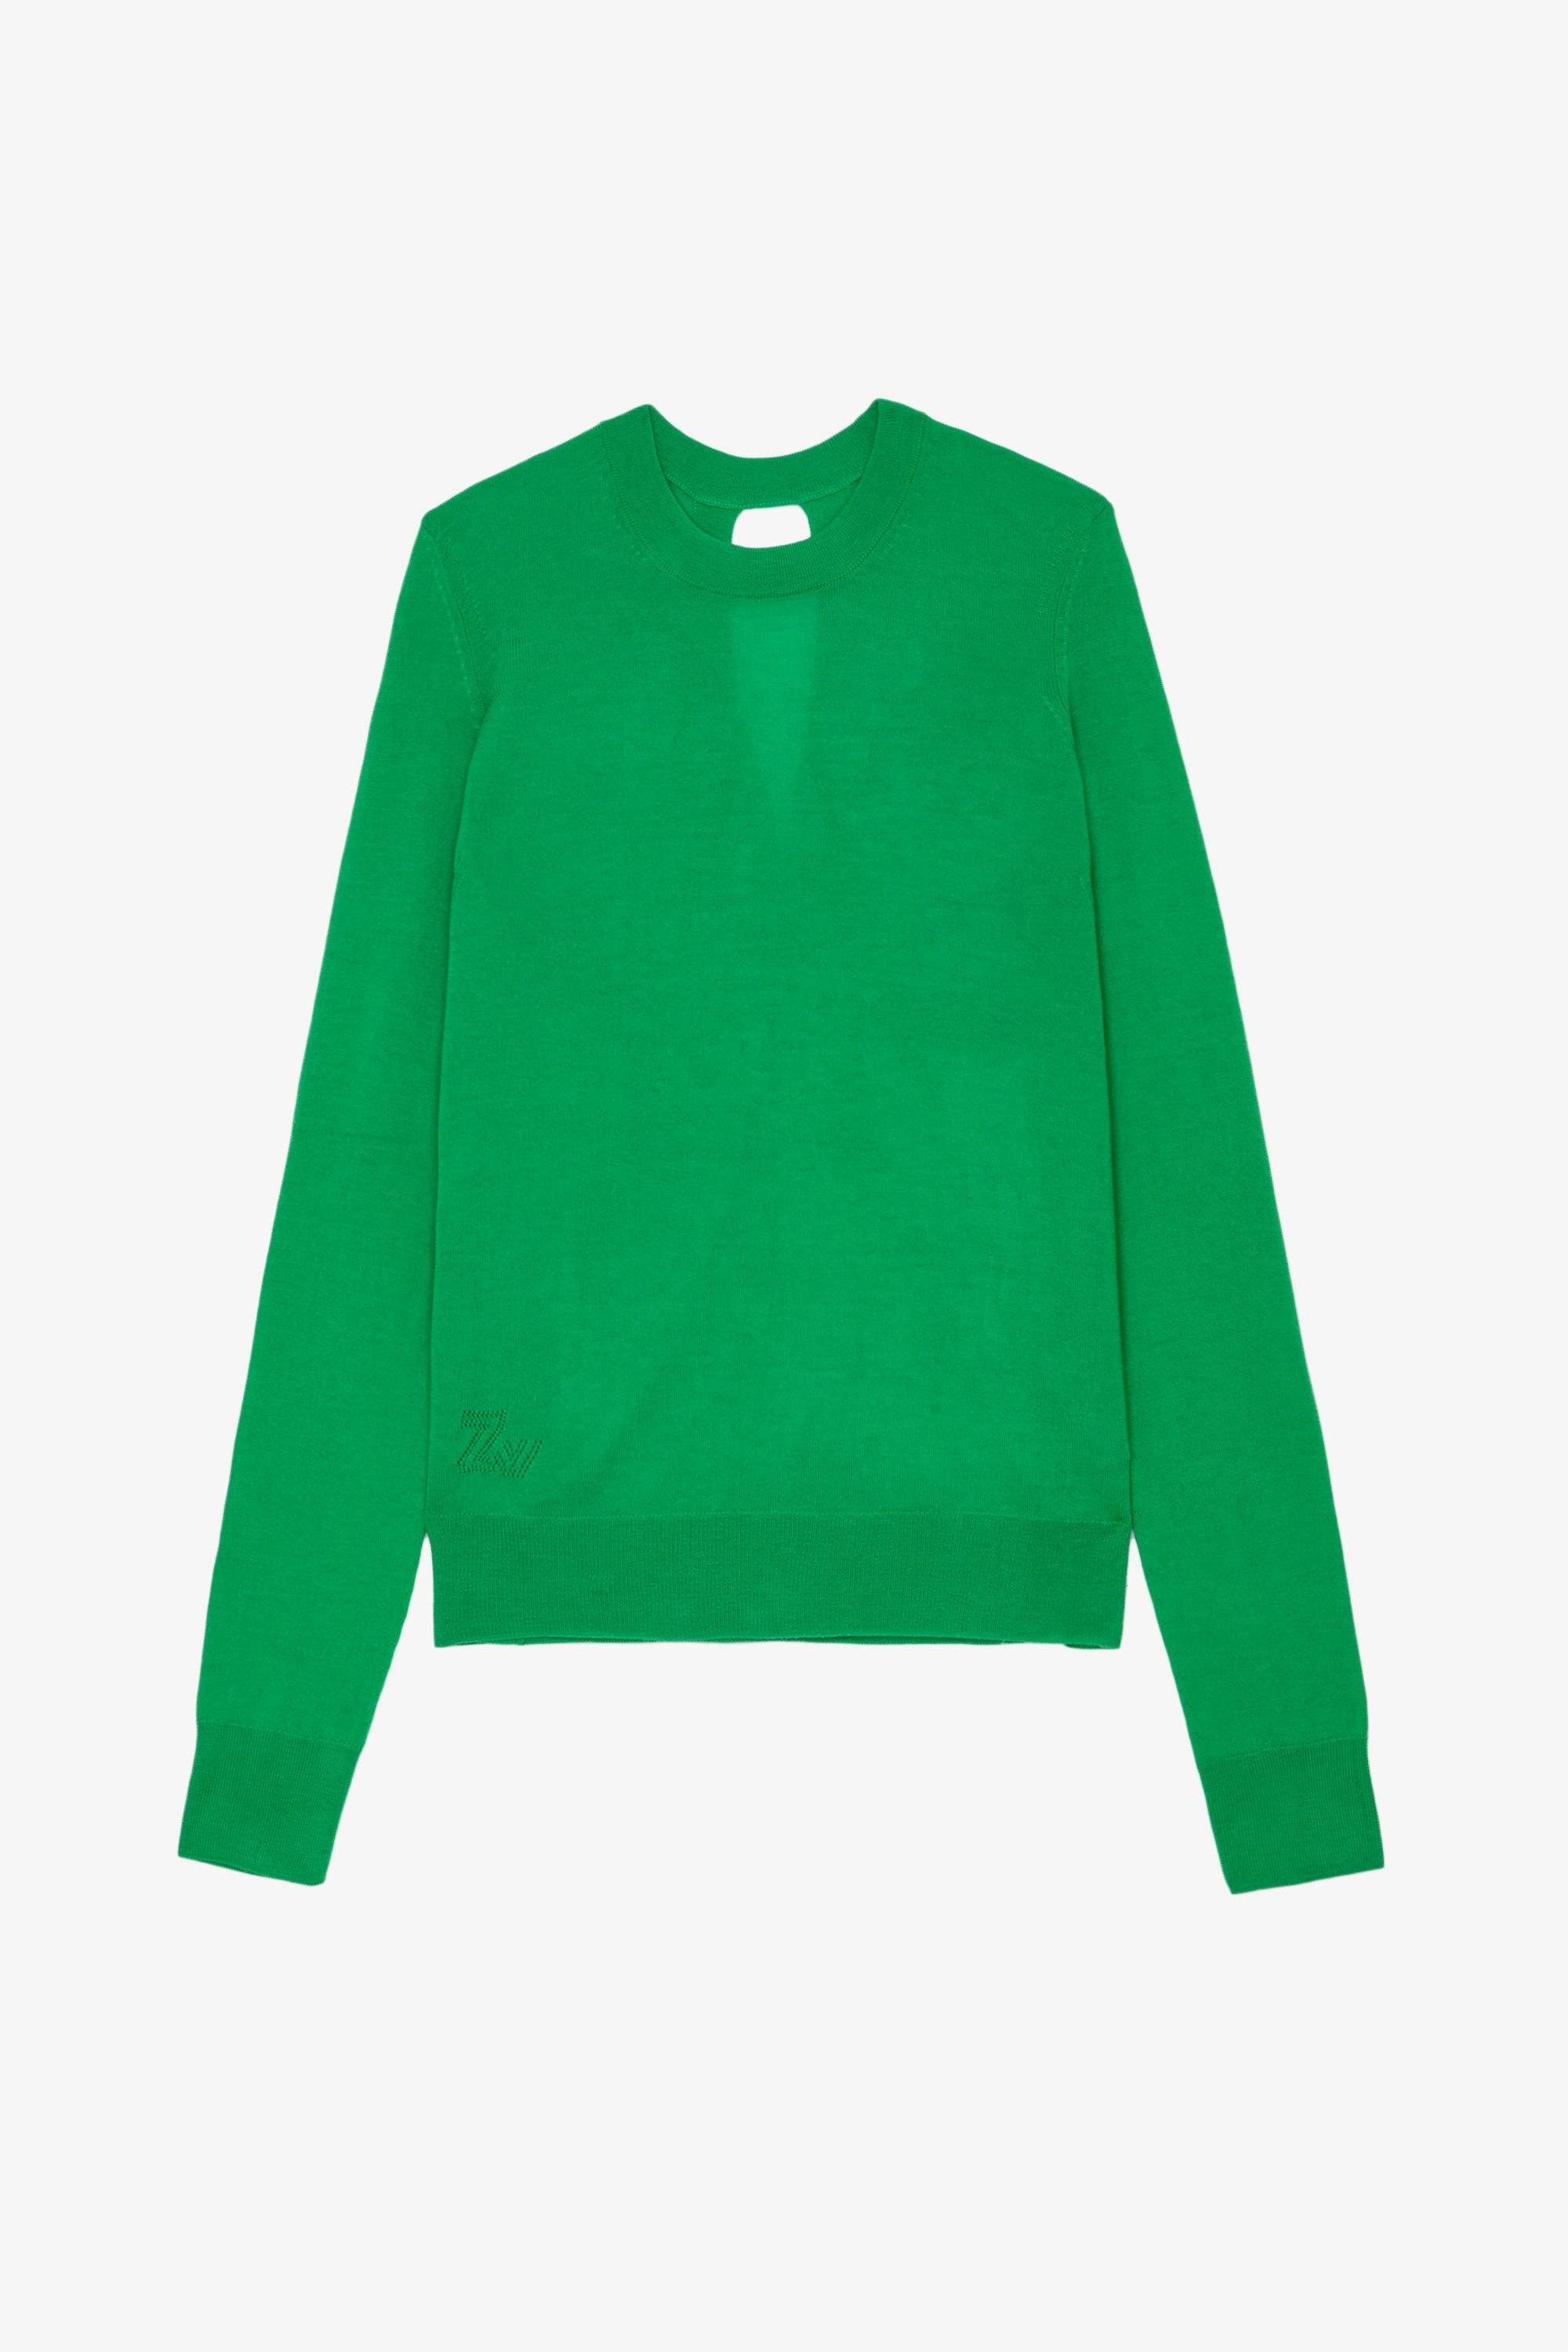 Emma Merinos ニット Women’s green long-sleeved merino knit jumper with round neck and back slit